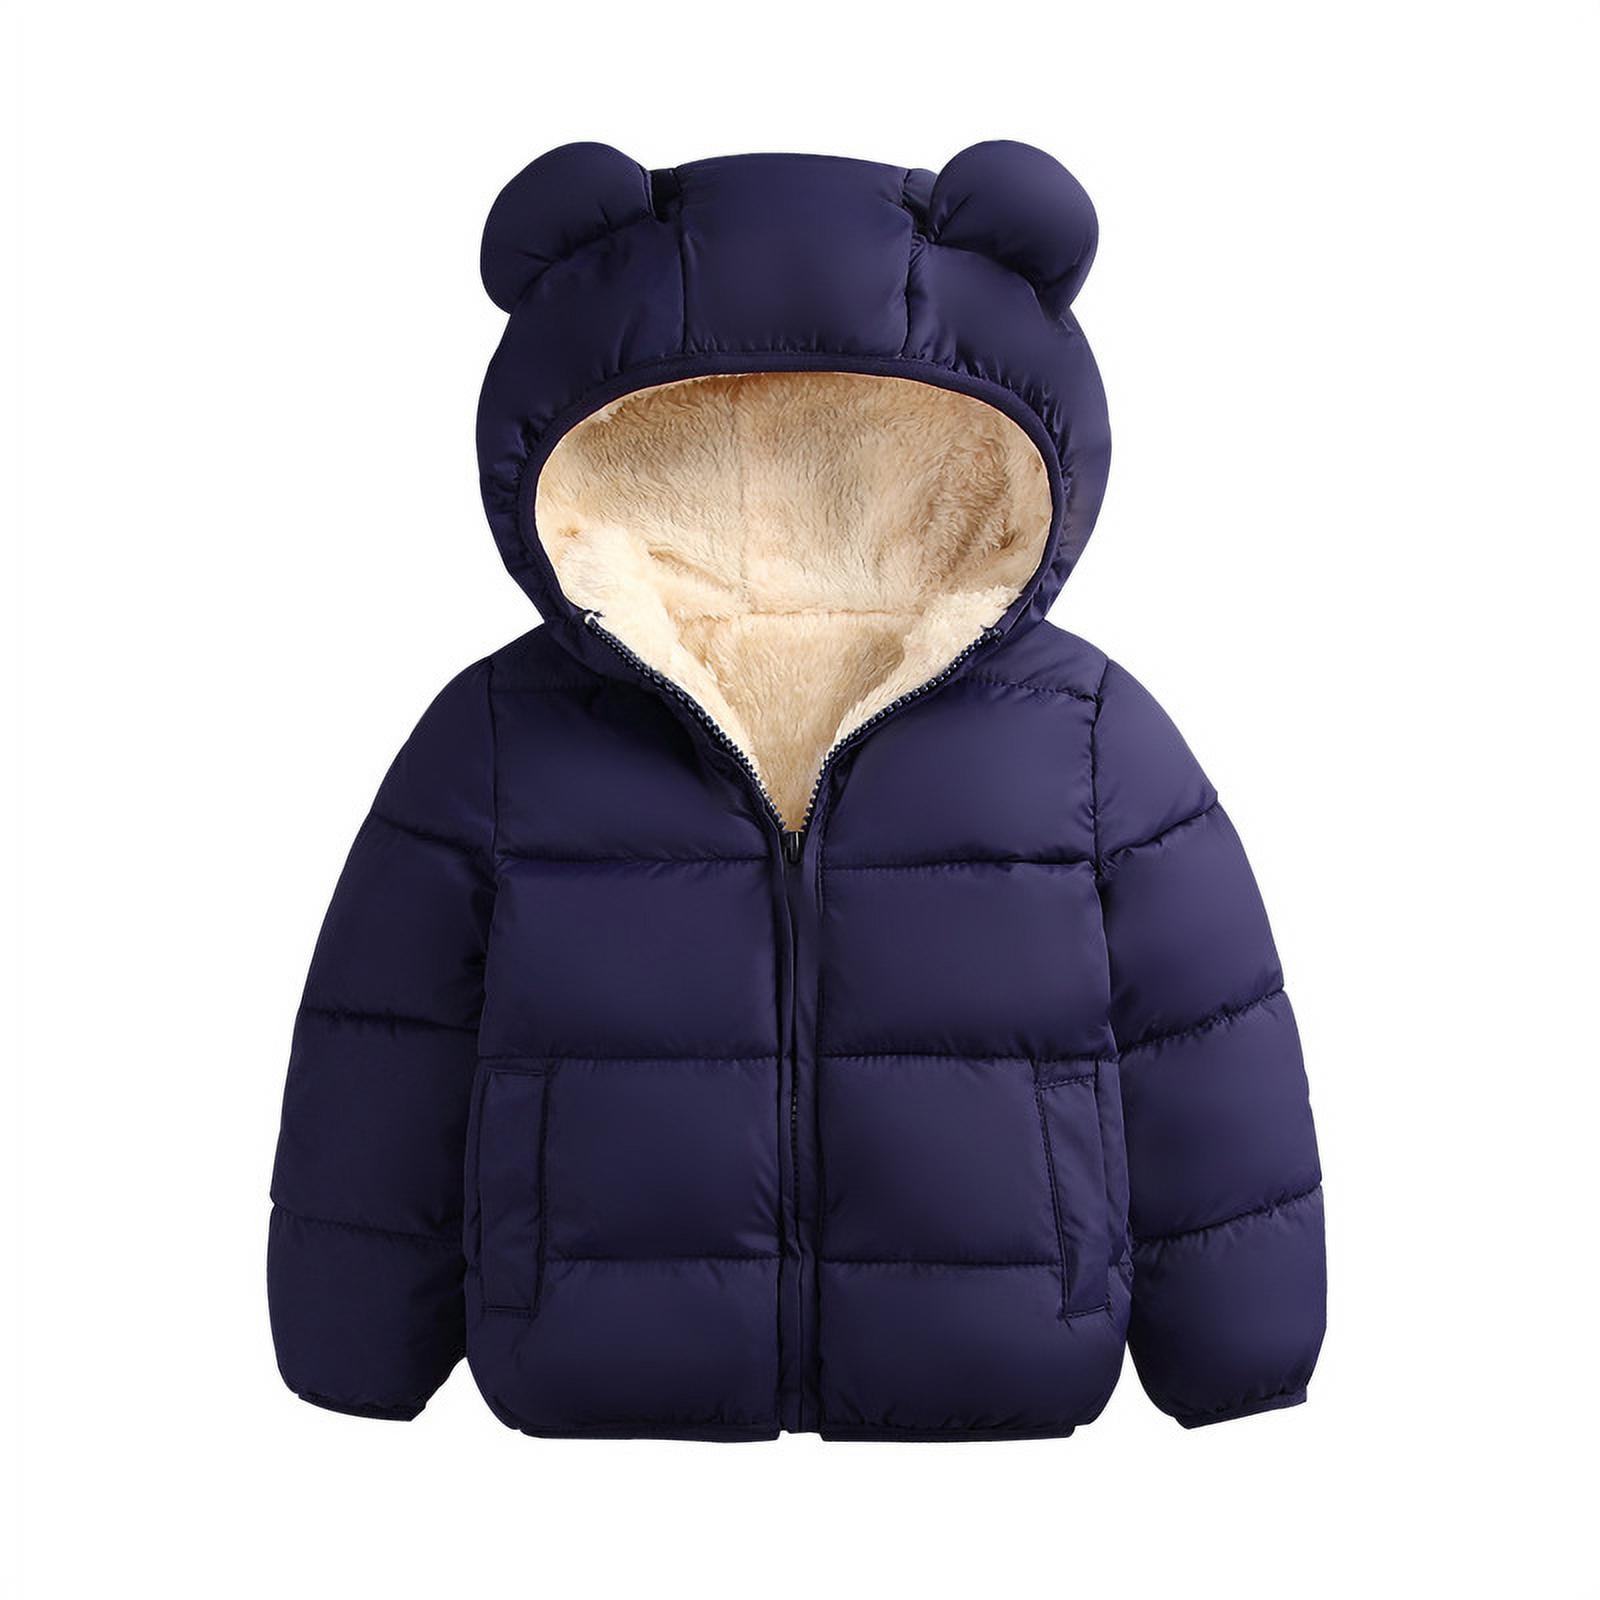 MNDSUDHG Baby Kids Boys Girls Fleece Full Zip Up Hoodie with Bear Ears Solid Color Coat Sweater Fall Winter Hooded Jacket